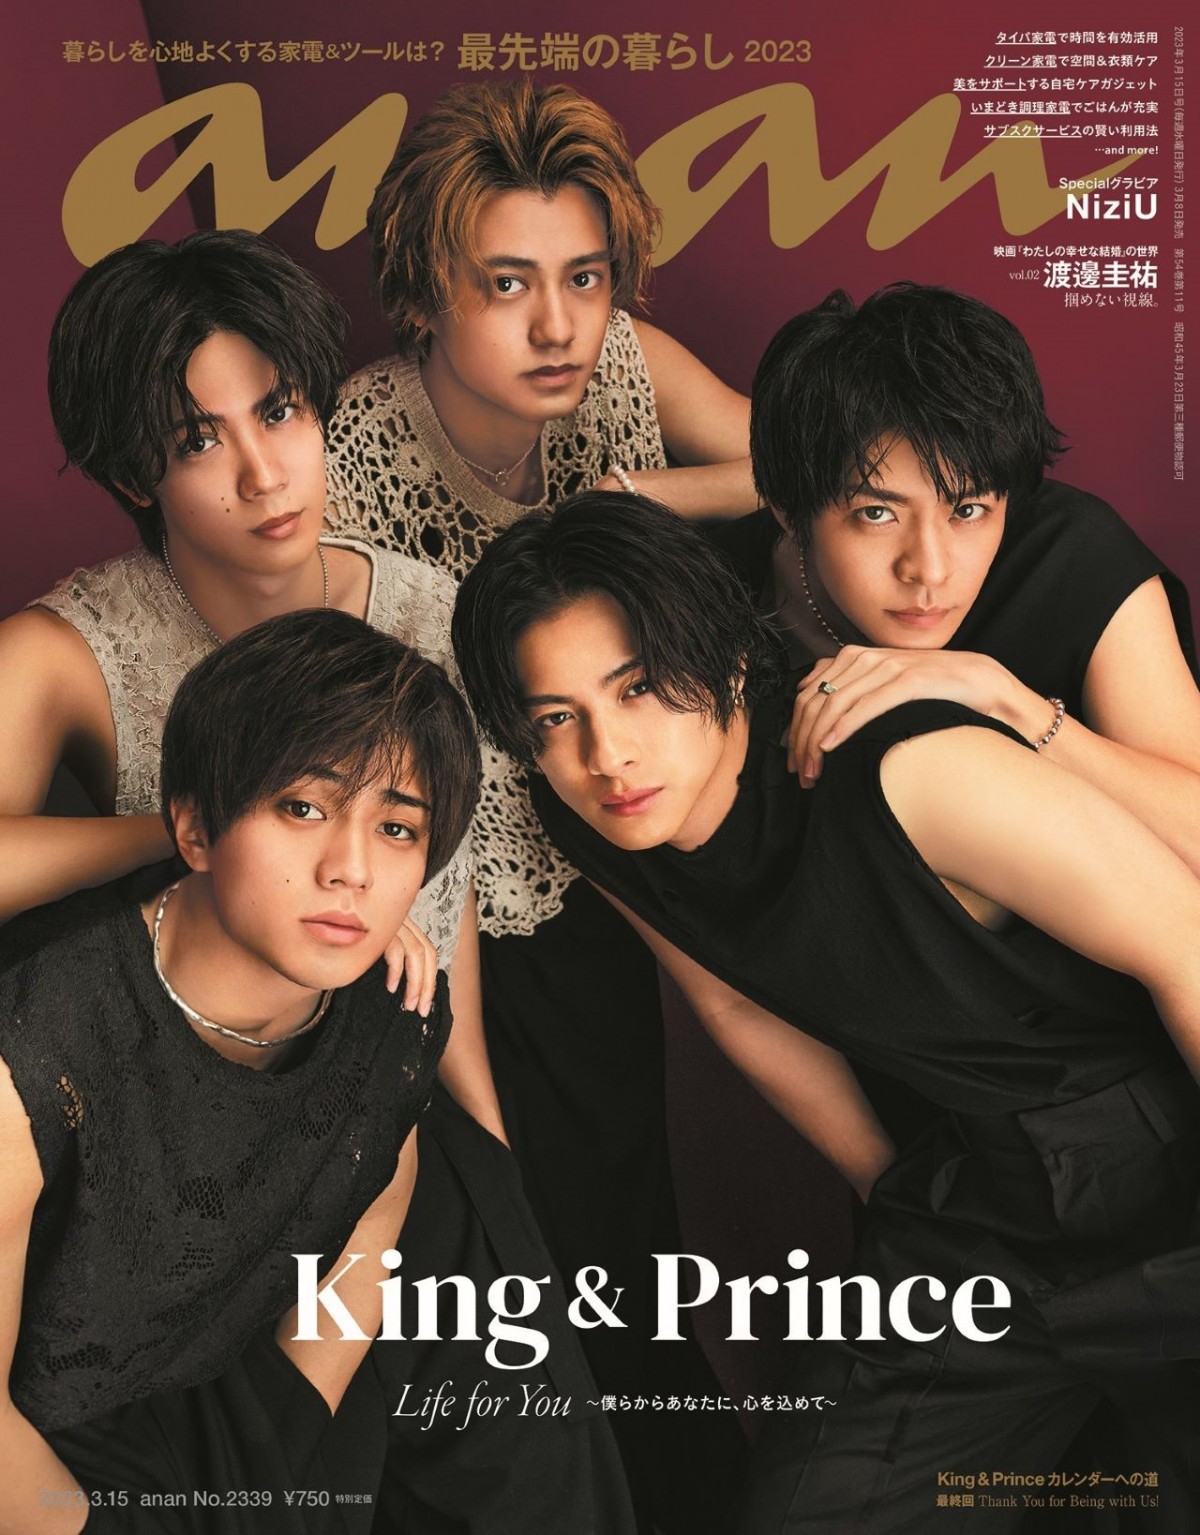 King & Prince with 雑誌 - 女性情報誌